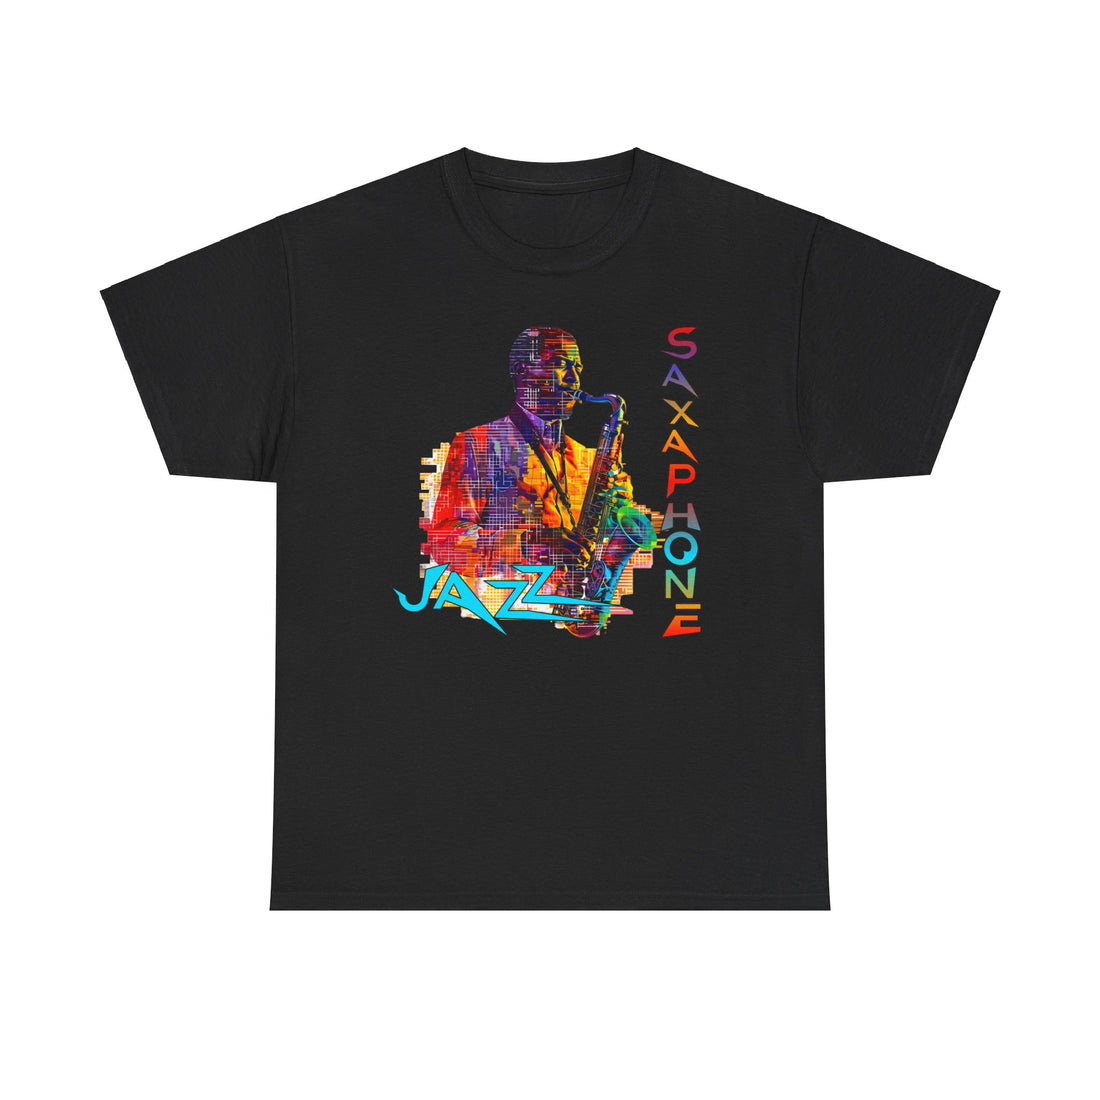 Jazz Saxophone T Shirts, Saxophone Player T Shirts, Abstract Art Black T Shirts, Cool Brass Sax Musician Shirt, Jazz Musician Shirt Gifts